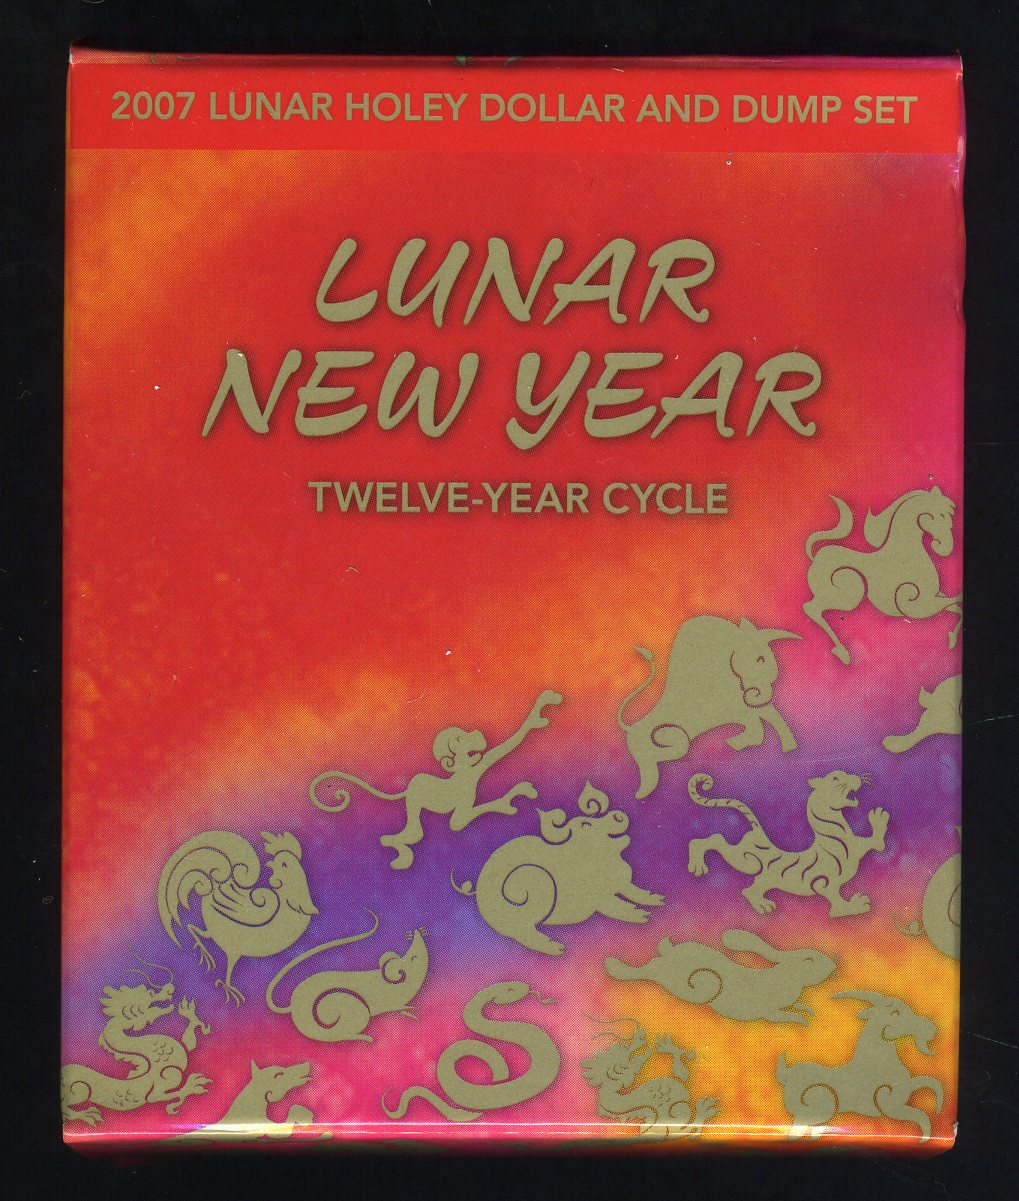 Thumbnail for 2007 Lunar Holey Dollar & Dump Set - Lunar New Year